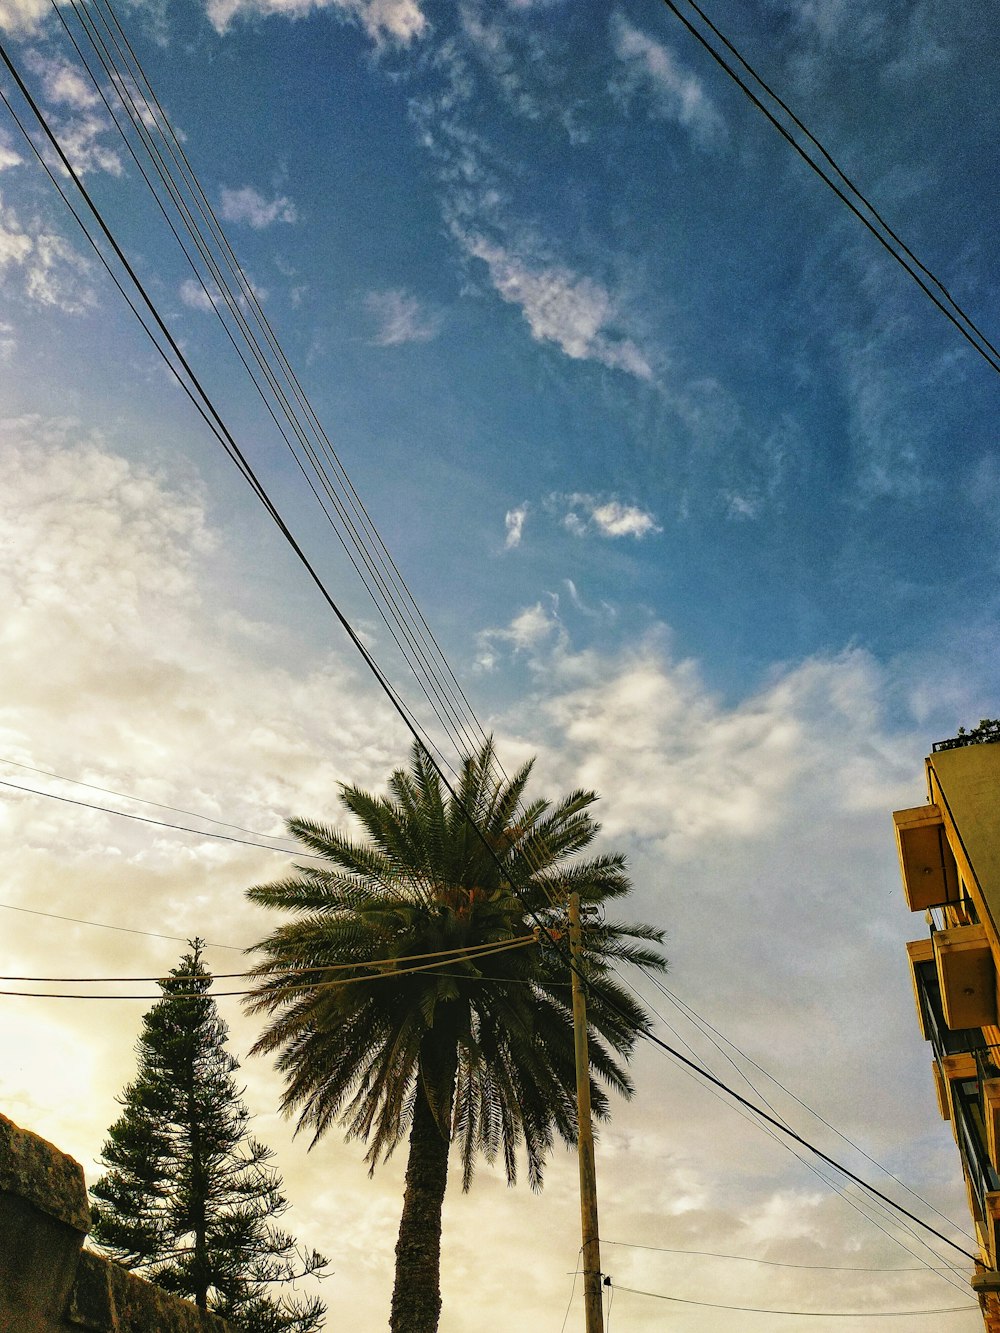 a tall palm tree sitting next to a traffic light